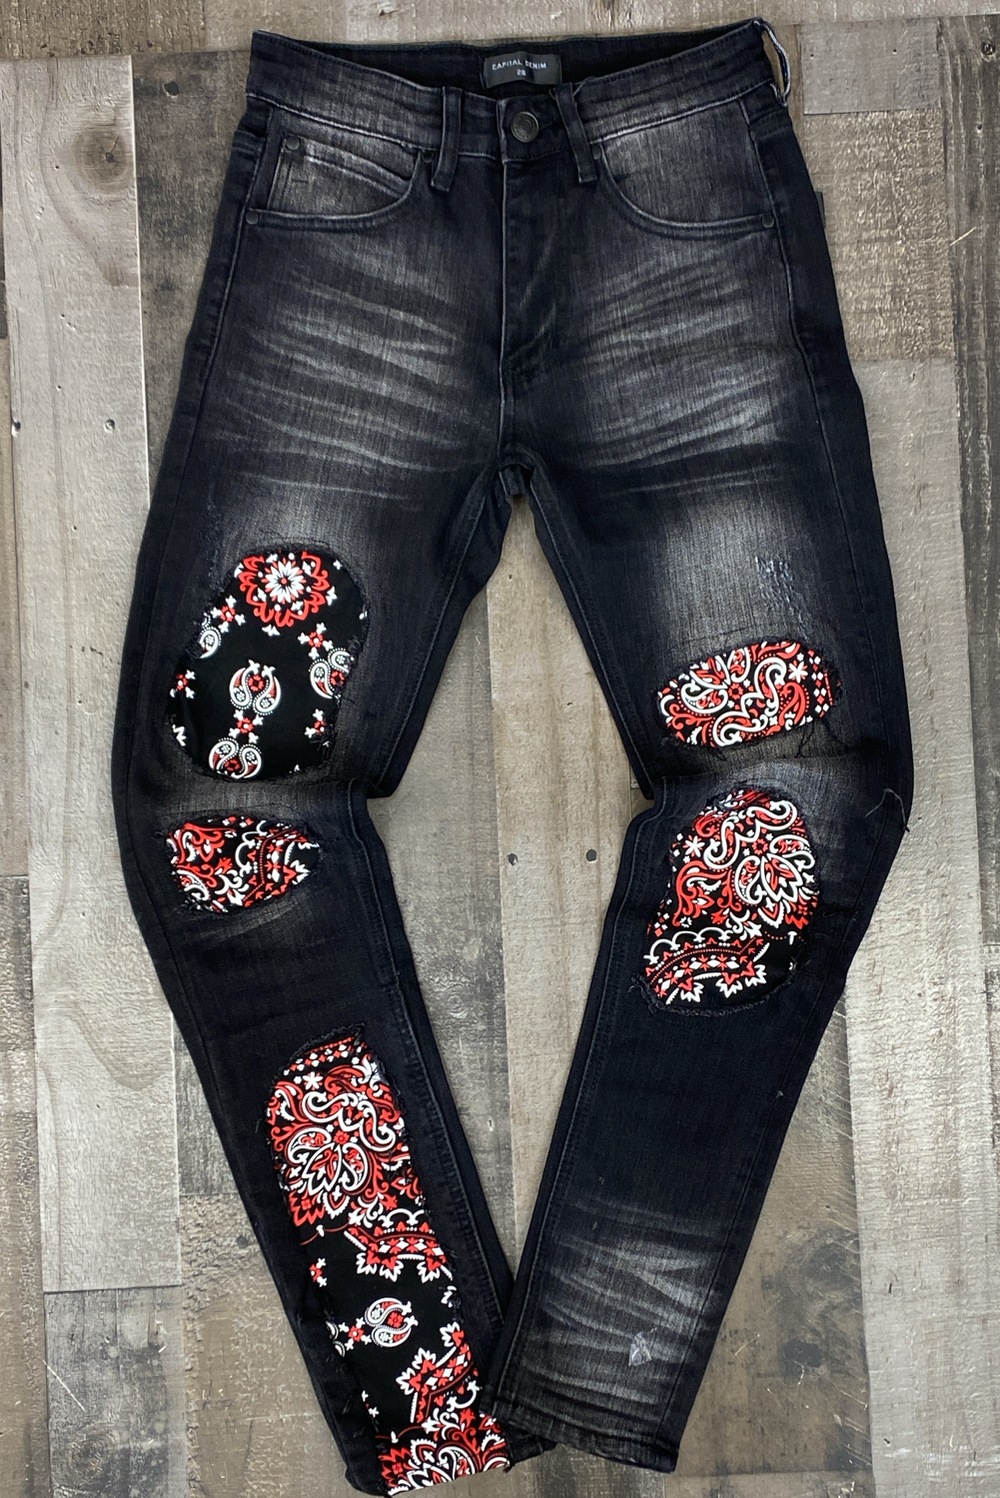 CPTL Denim- Granada denim jeans